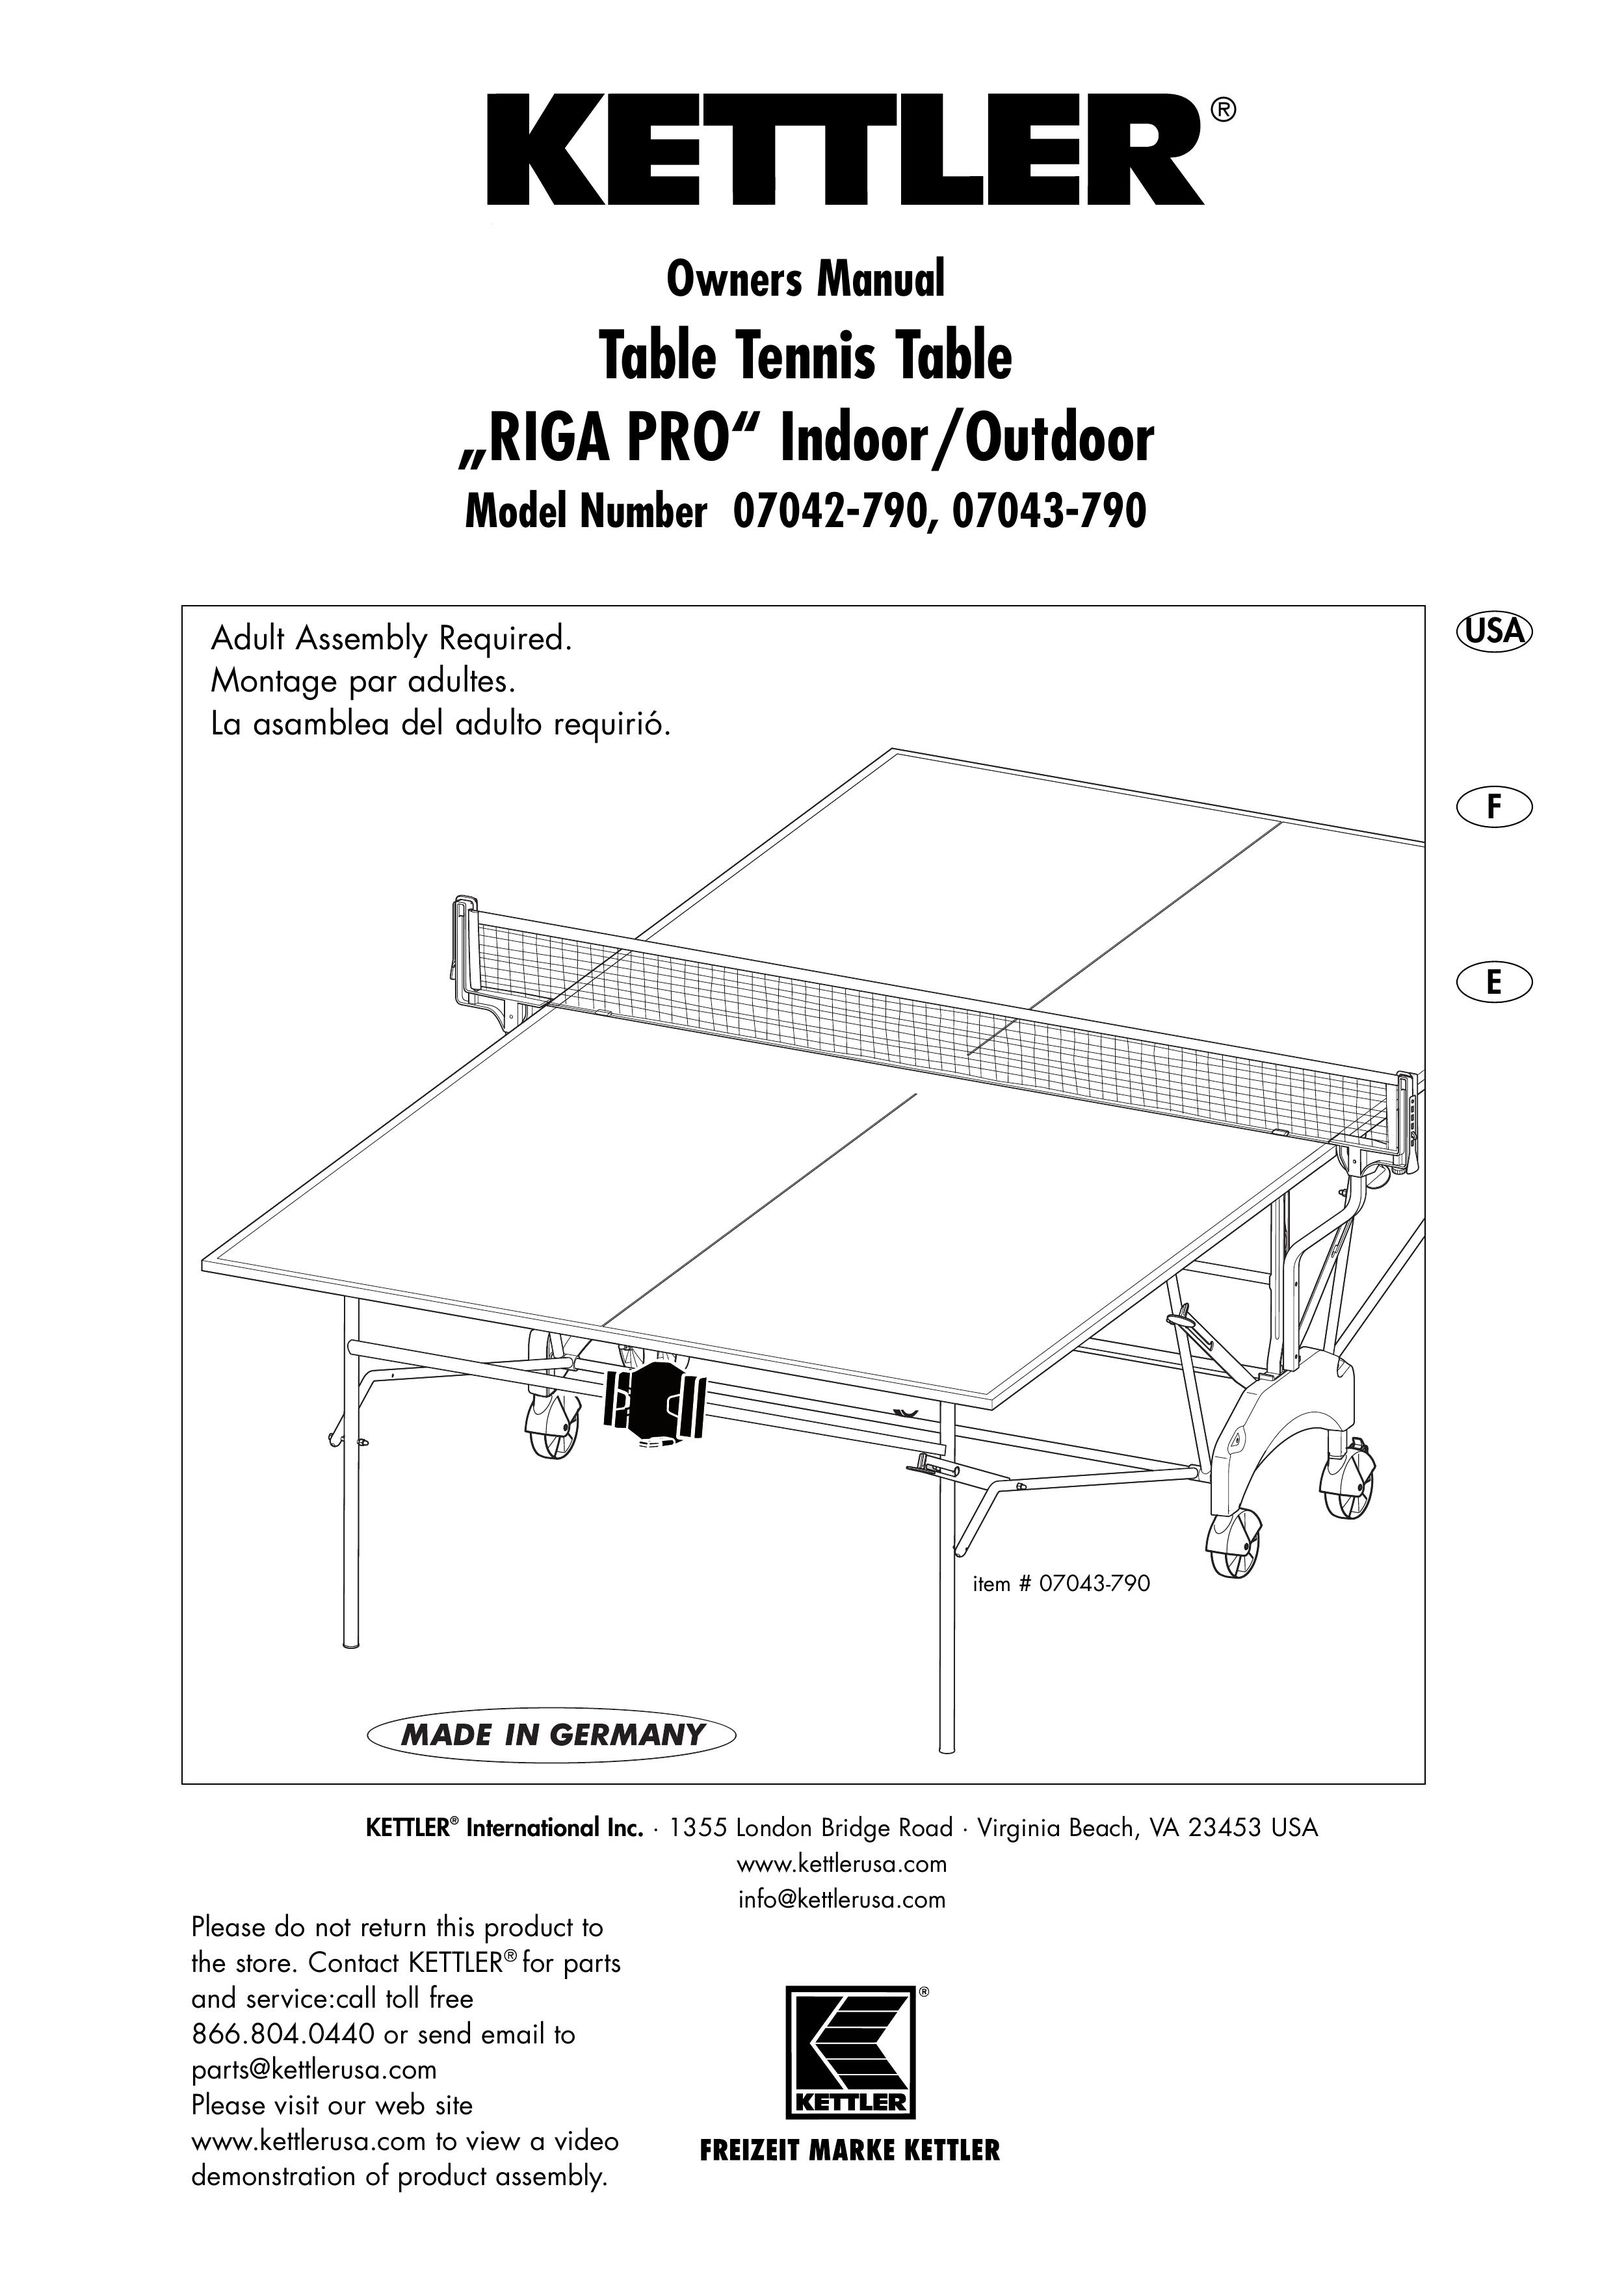 Kettler 07043-790 Table Top Game User Manual